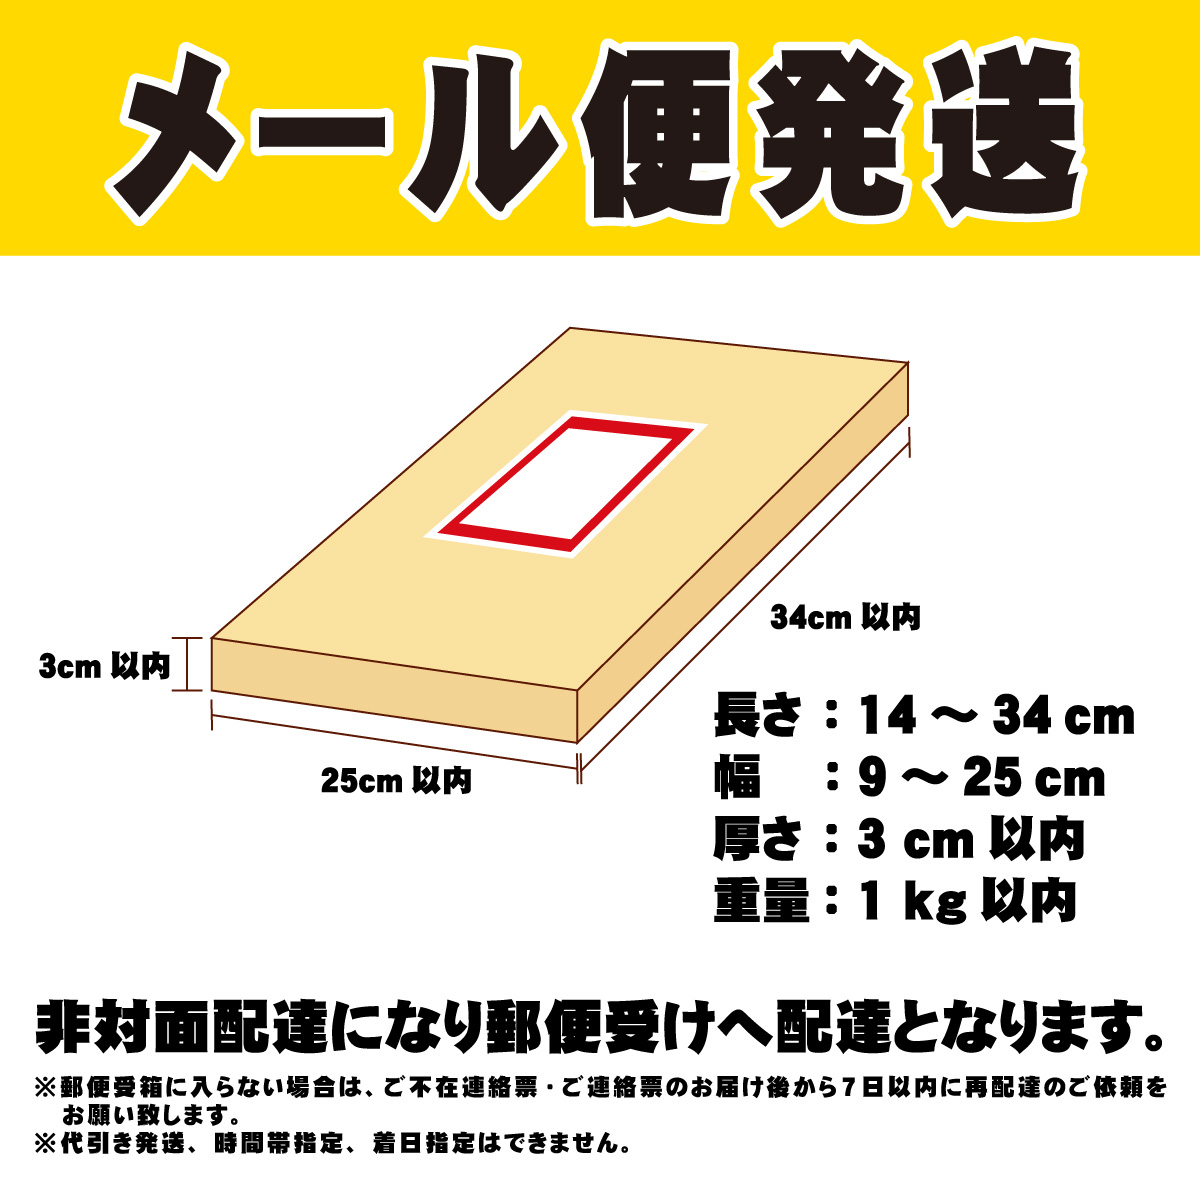  Hokkaido производство рефрижератор edamame ho k Len рефрижератор Tokachi. соль тест ветка бобы 500g